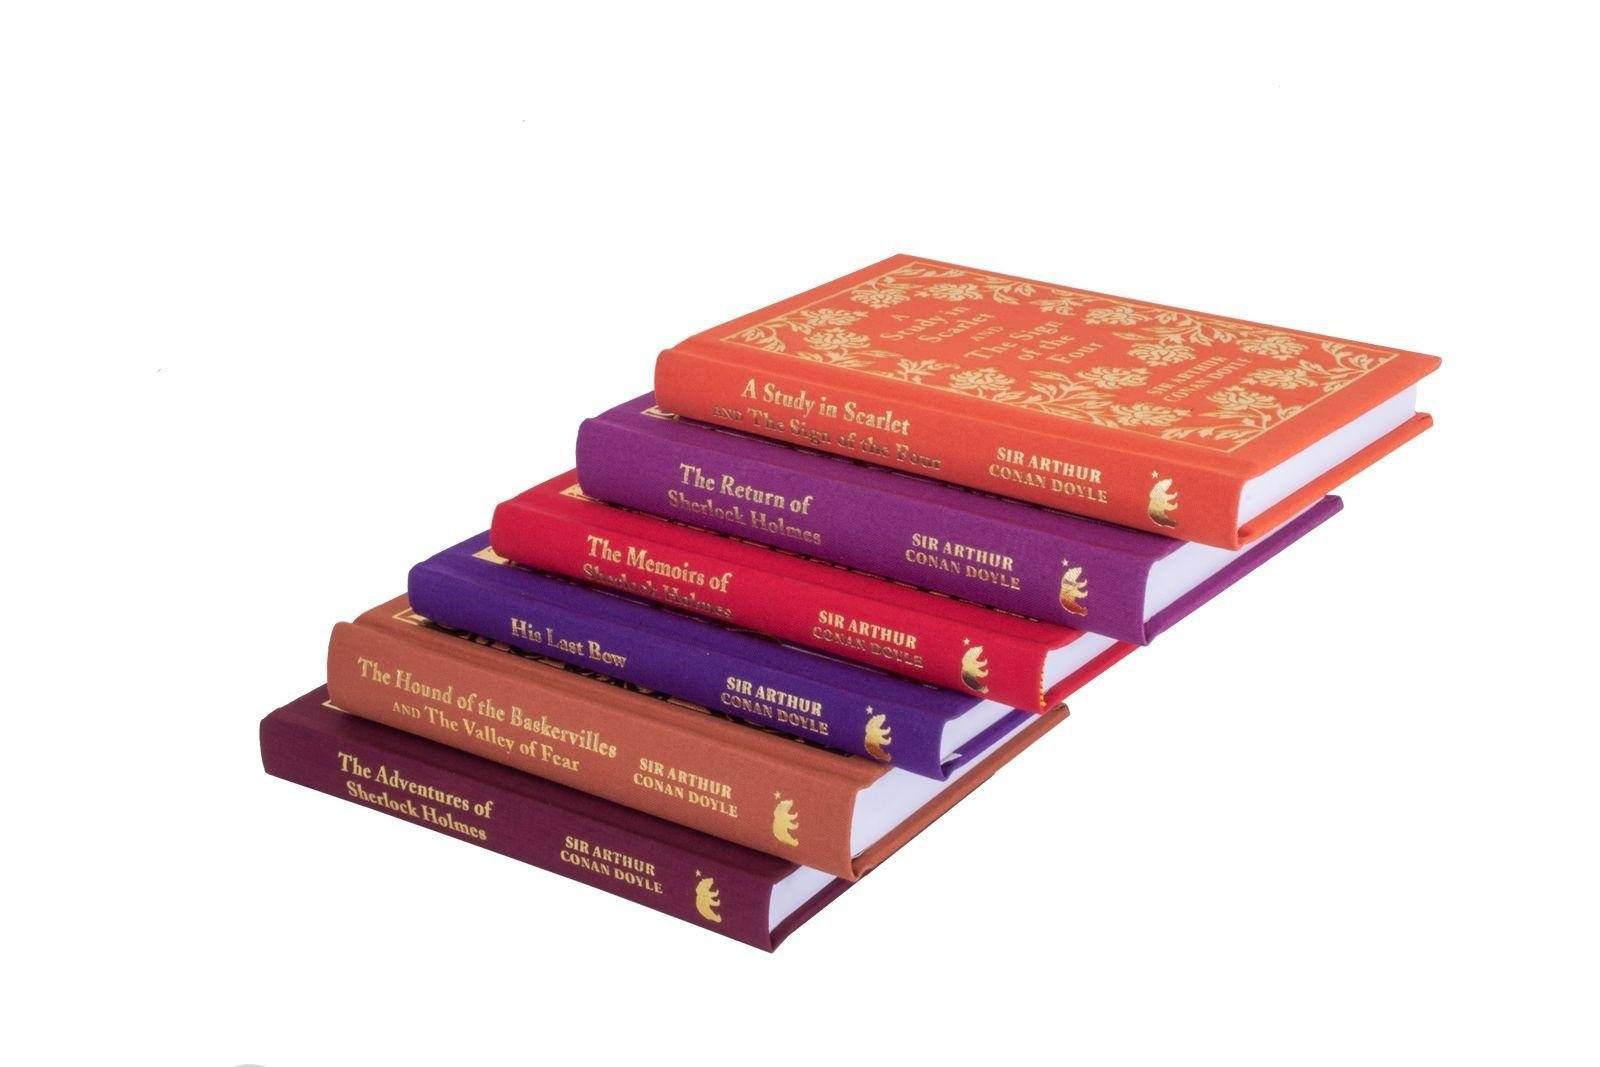 Sherlock Holmes Deluxe Collection by Sir Arthur Conan Doyle 6 Books Box Set - Mystery - Hardback